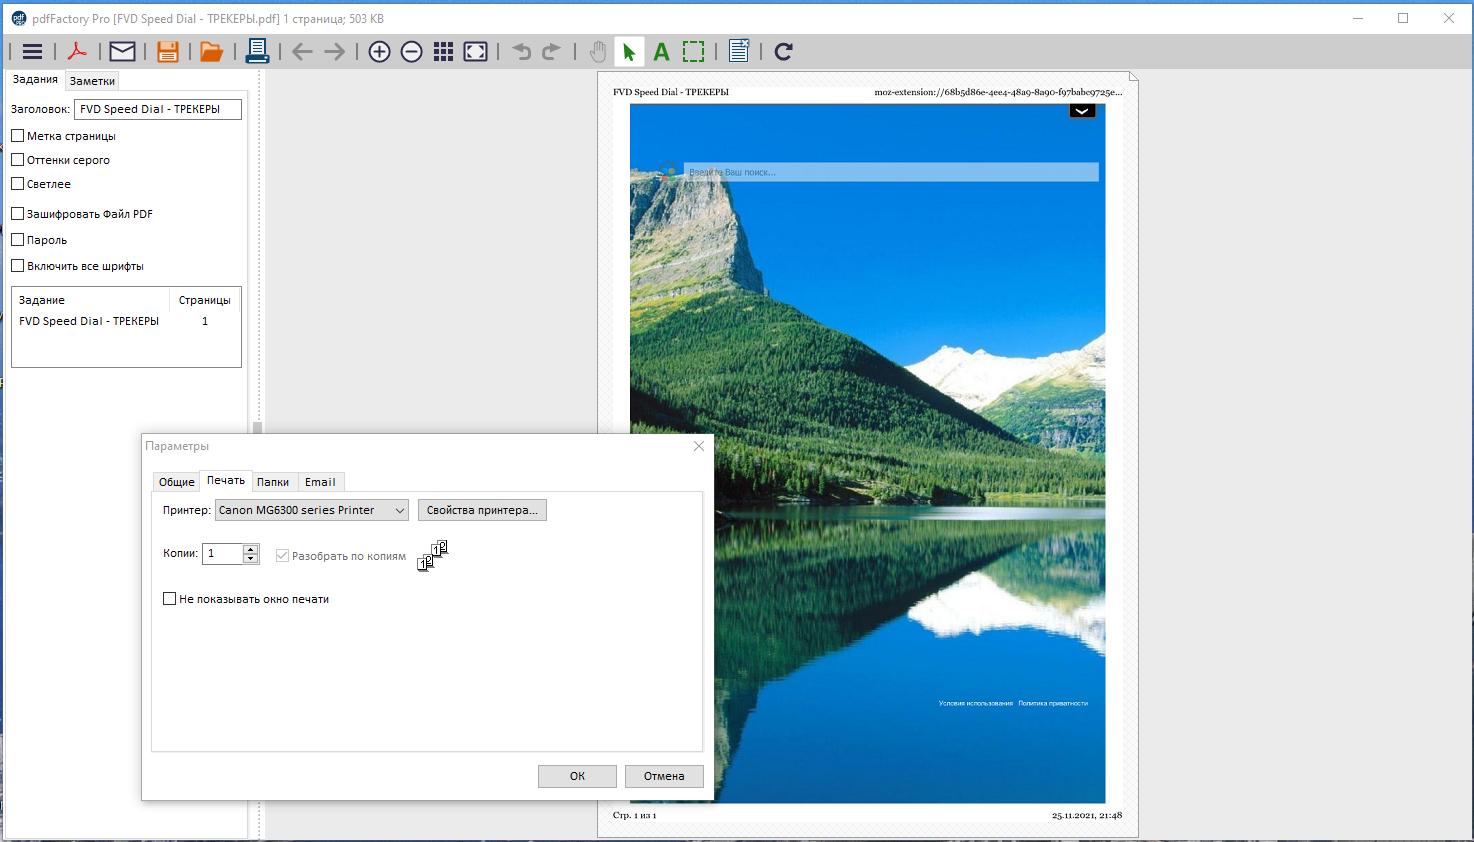 FinePrint Software (FinePrint 11.05 / pdfFactory Pro 8.05) RePack by elchupacabra [Multi/Ru]